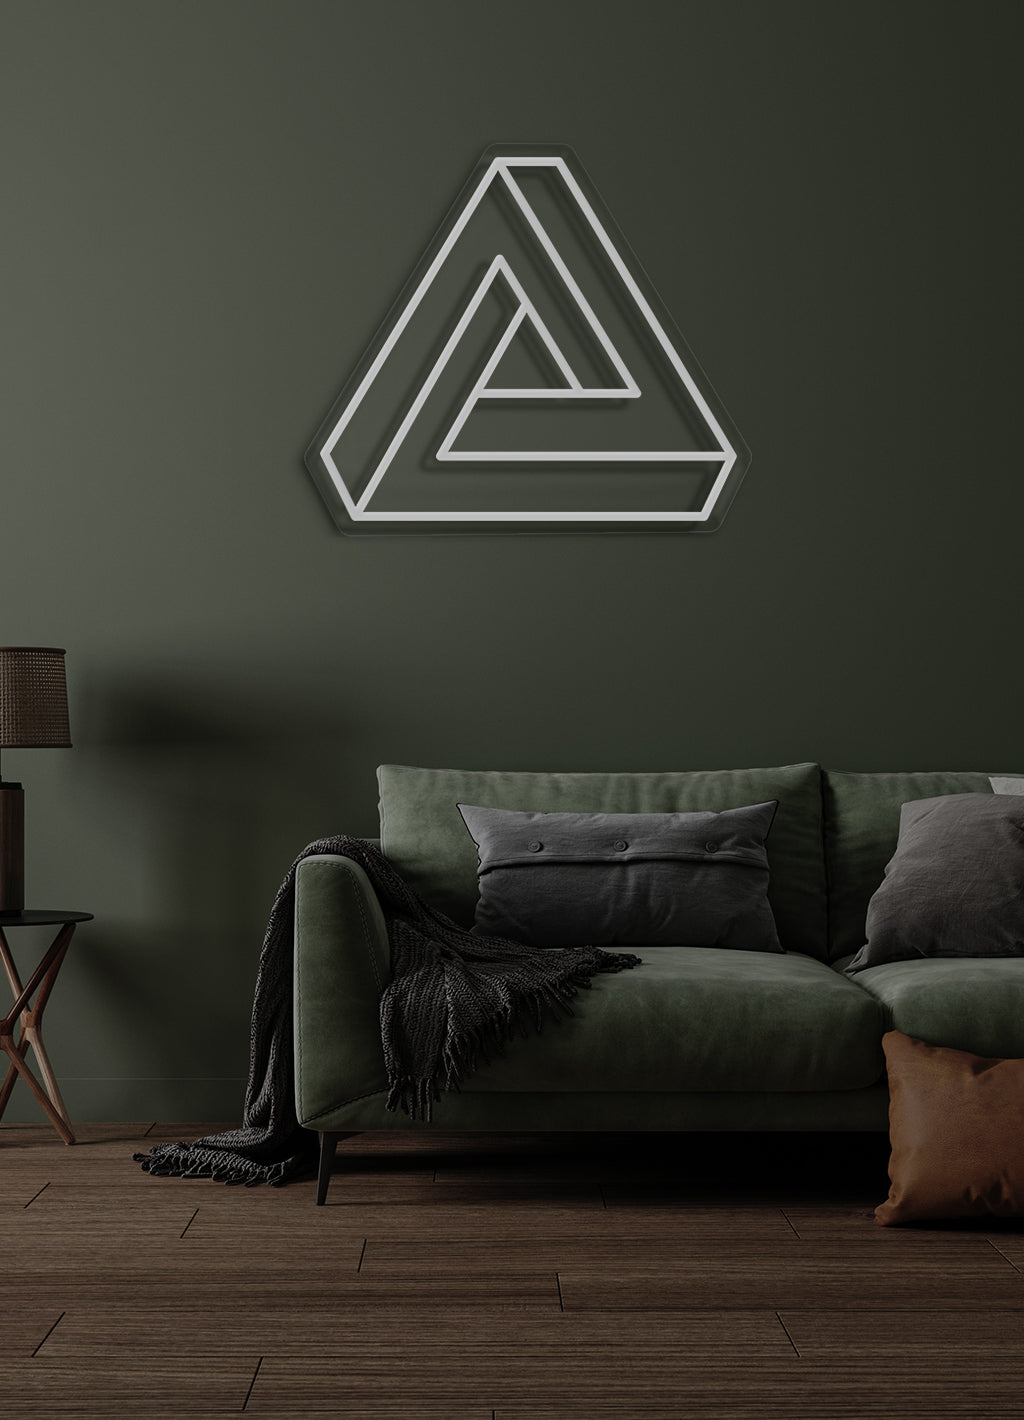 Triangle - LED Neon skilt